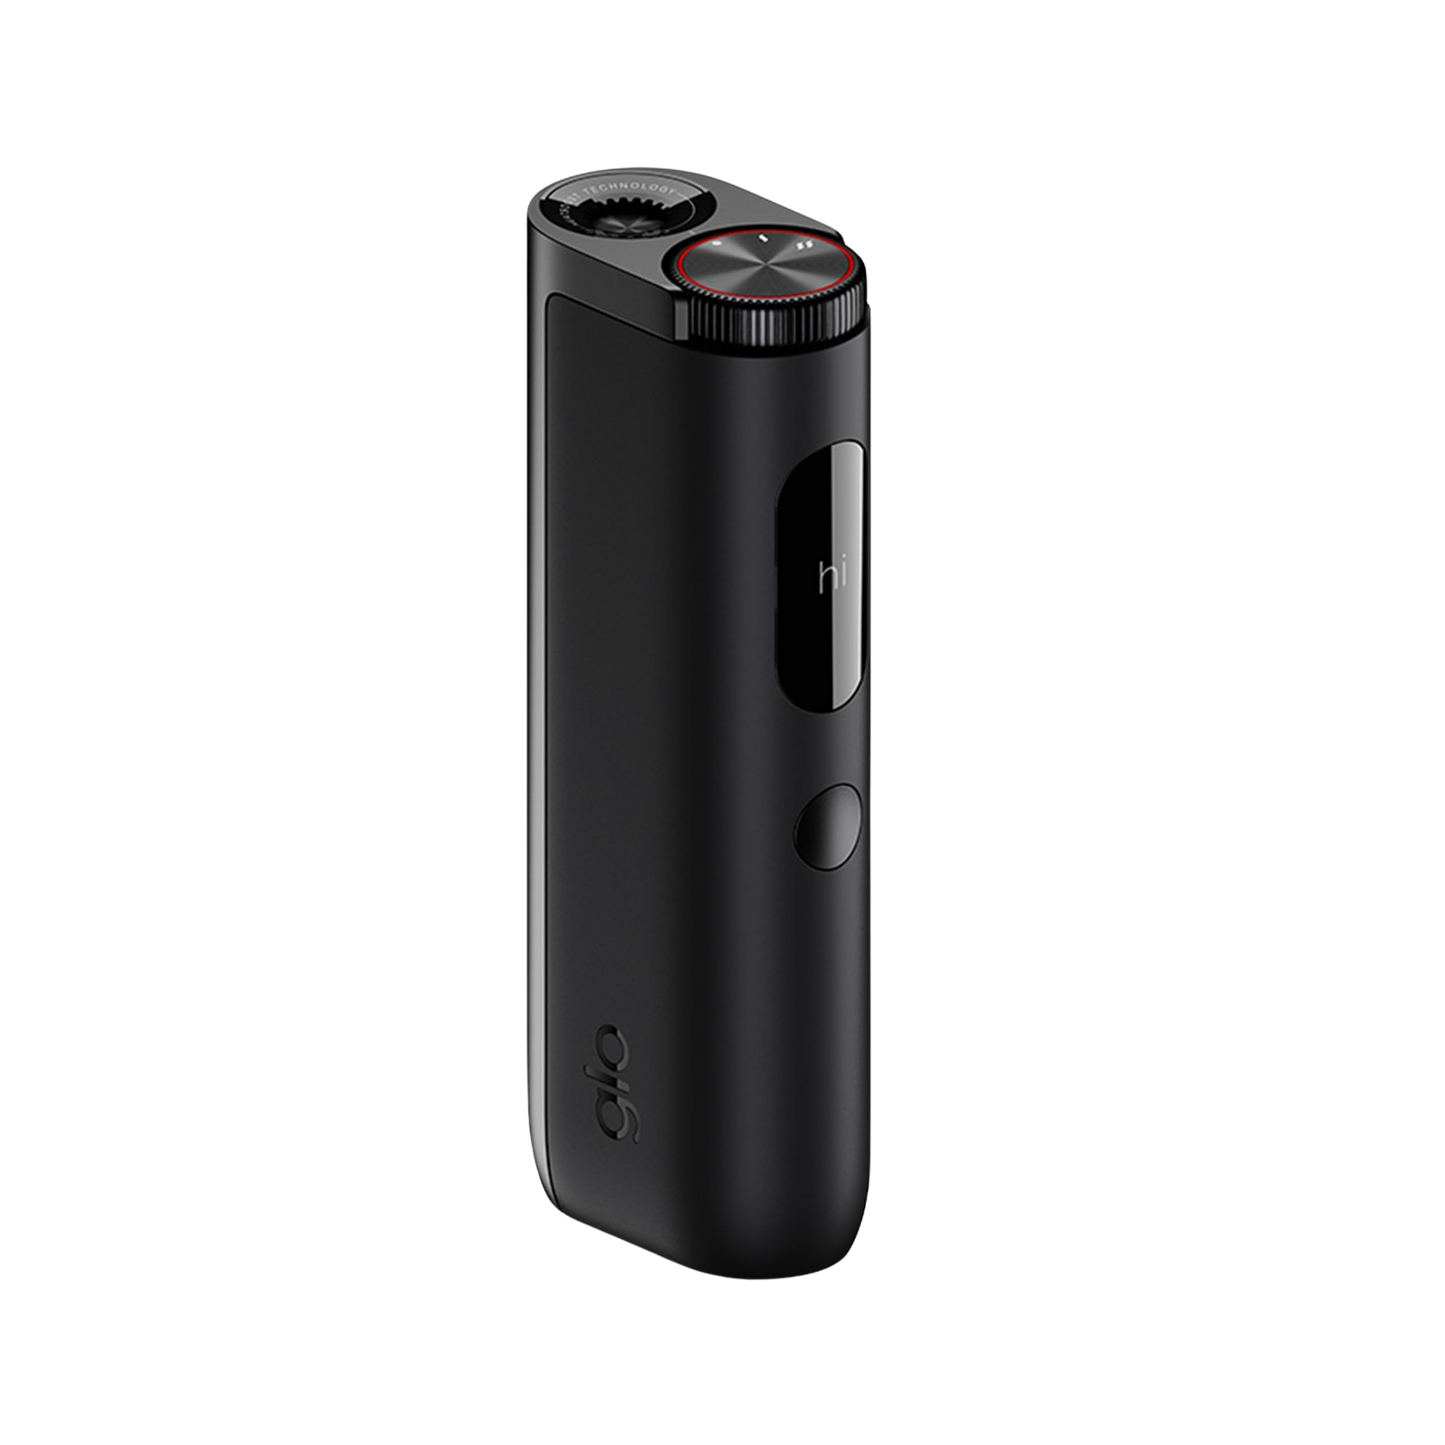 Glo Hyper X3 Pro Carbon Black